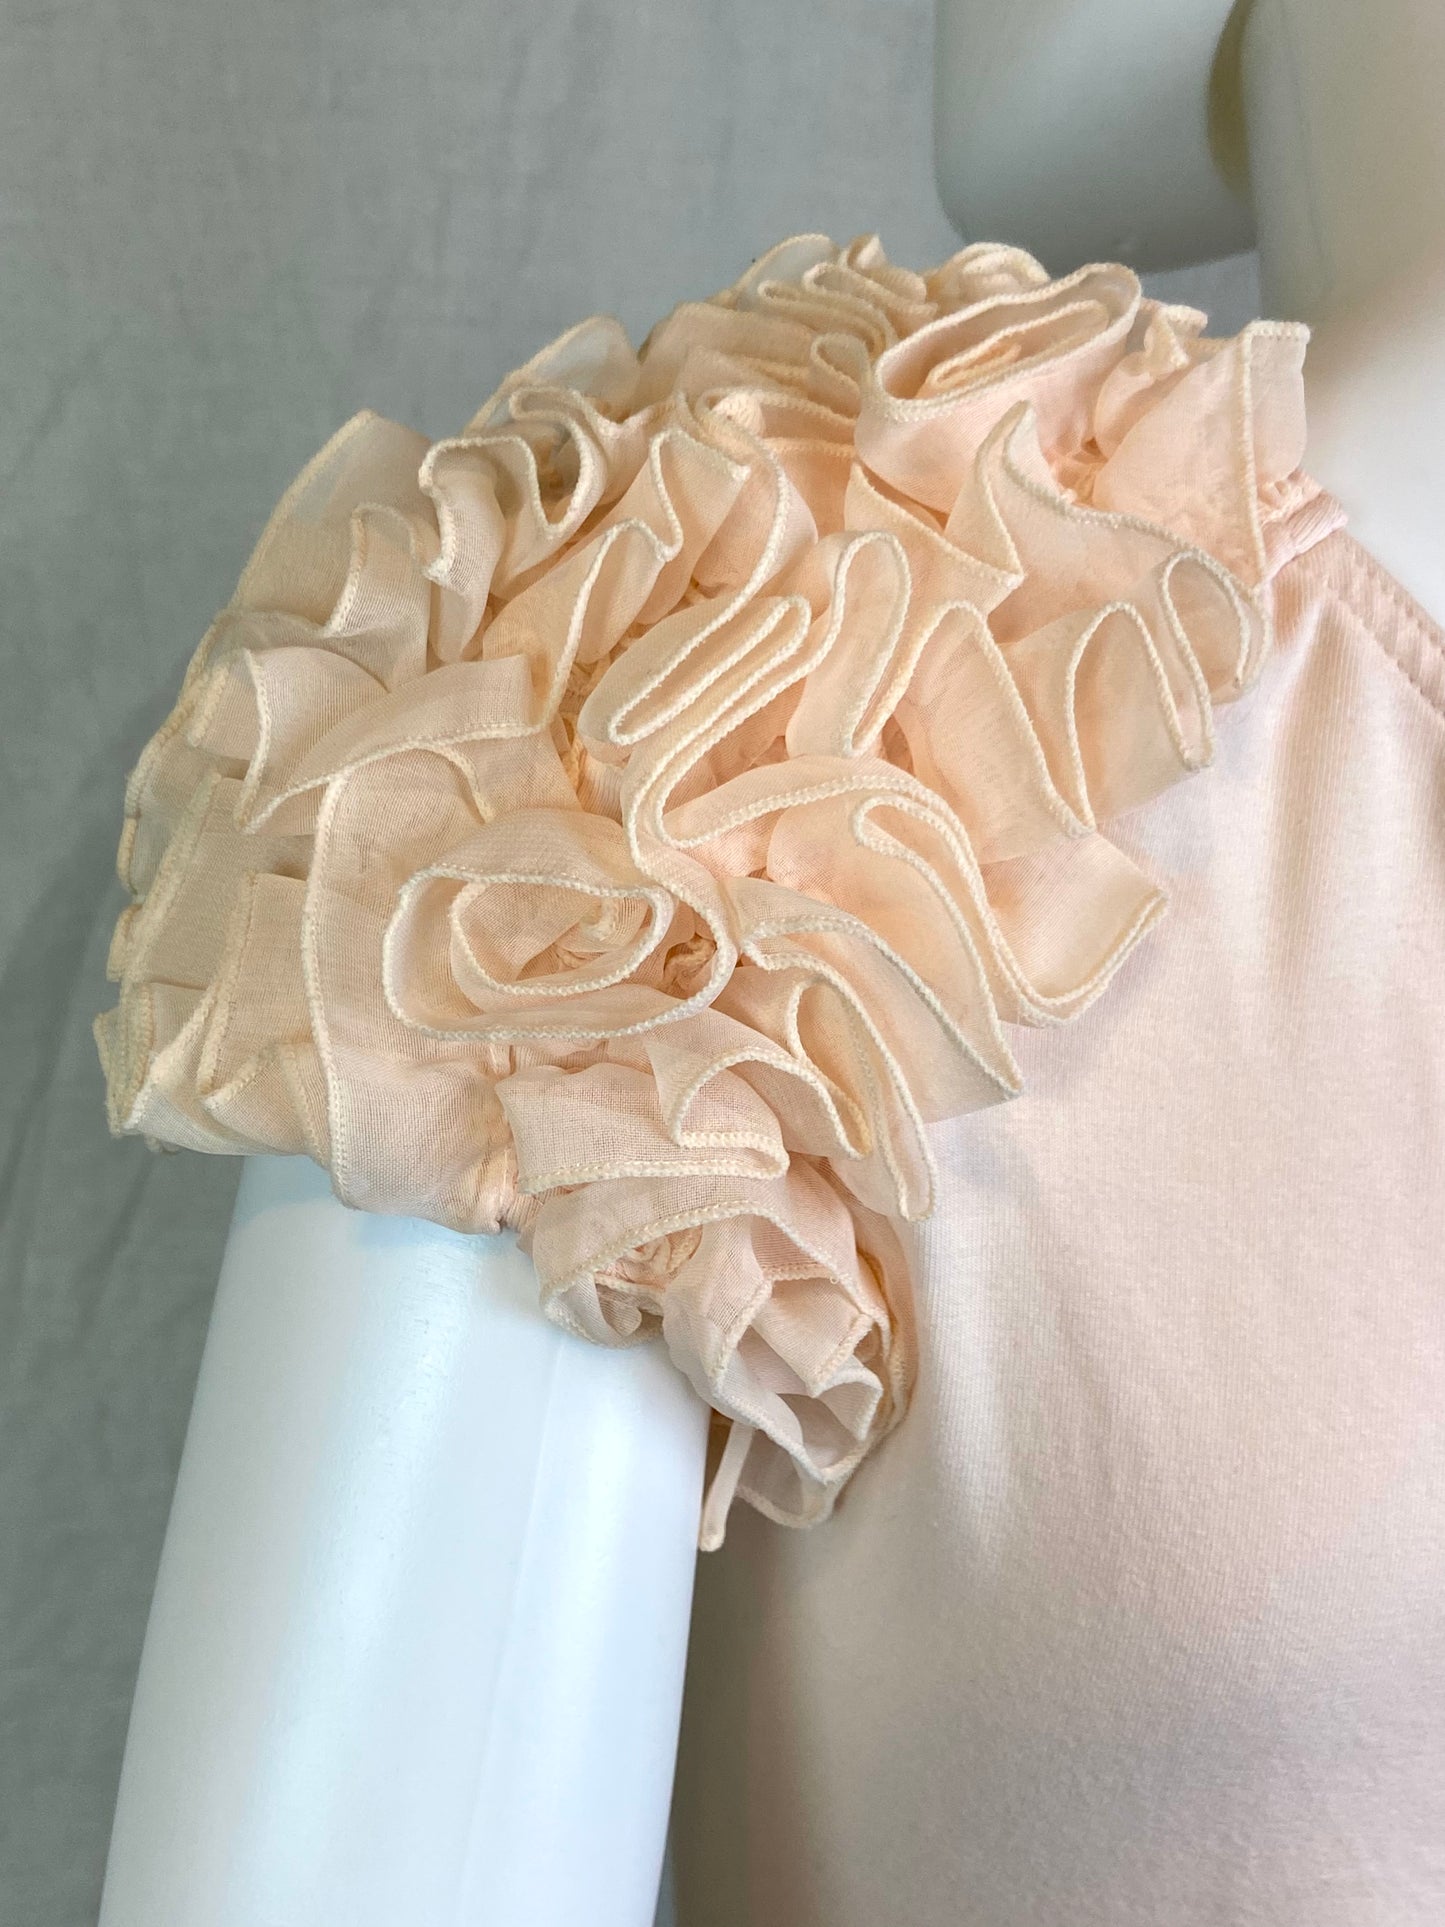 H&M Pink Peach Ruffle Sleeve Tee Dress Small